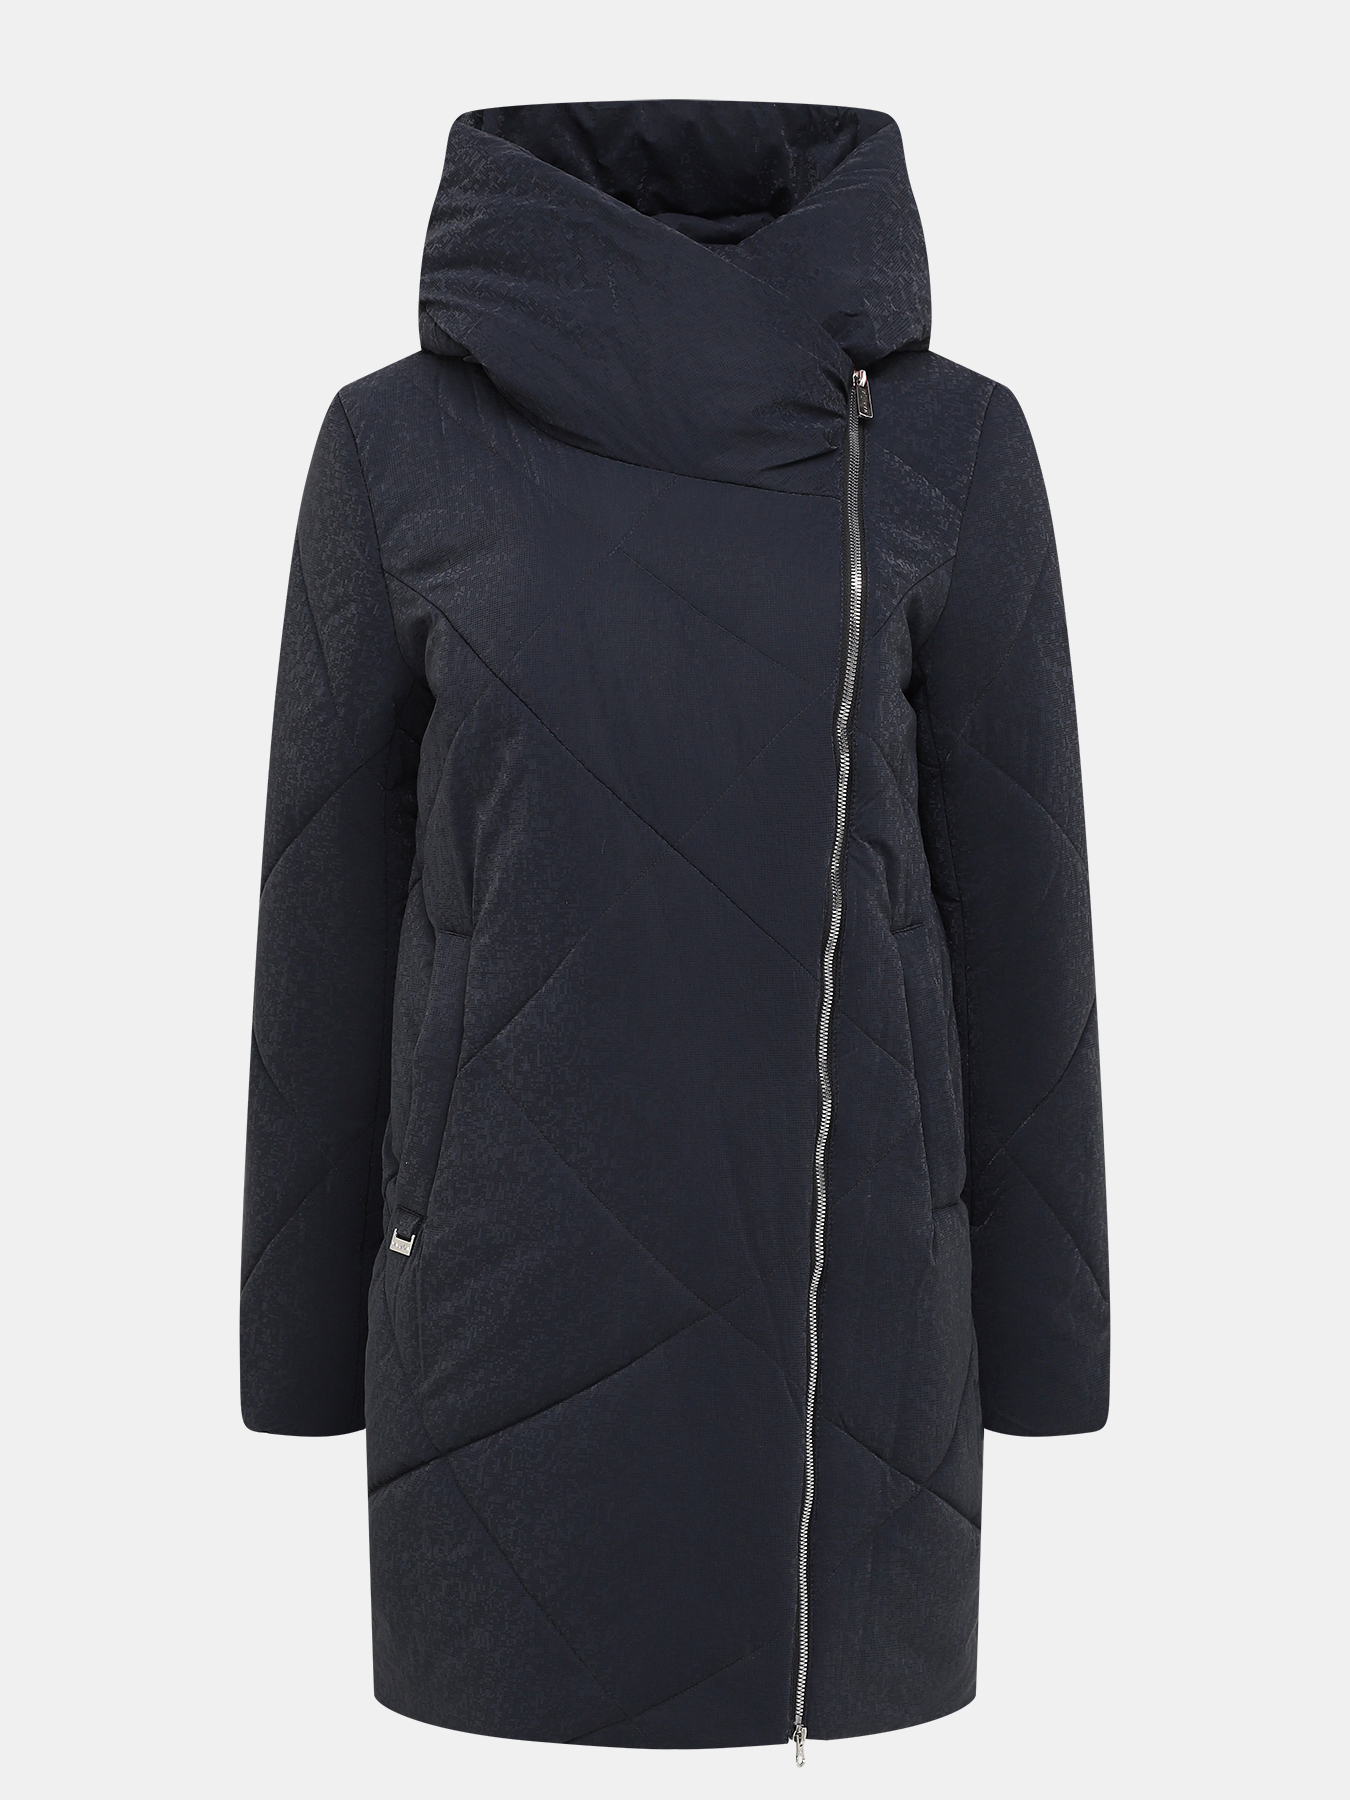 Пальто зимнее Maritta 433549-022, цвет темно-синий, размер 48 - фото 1